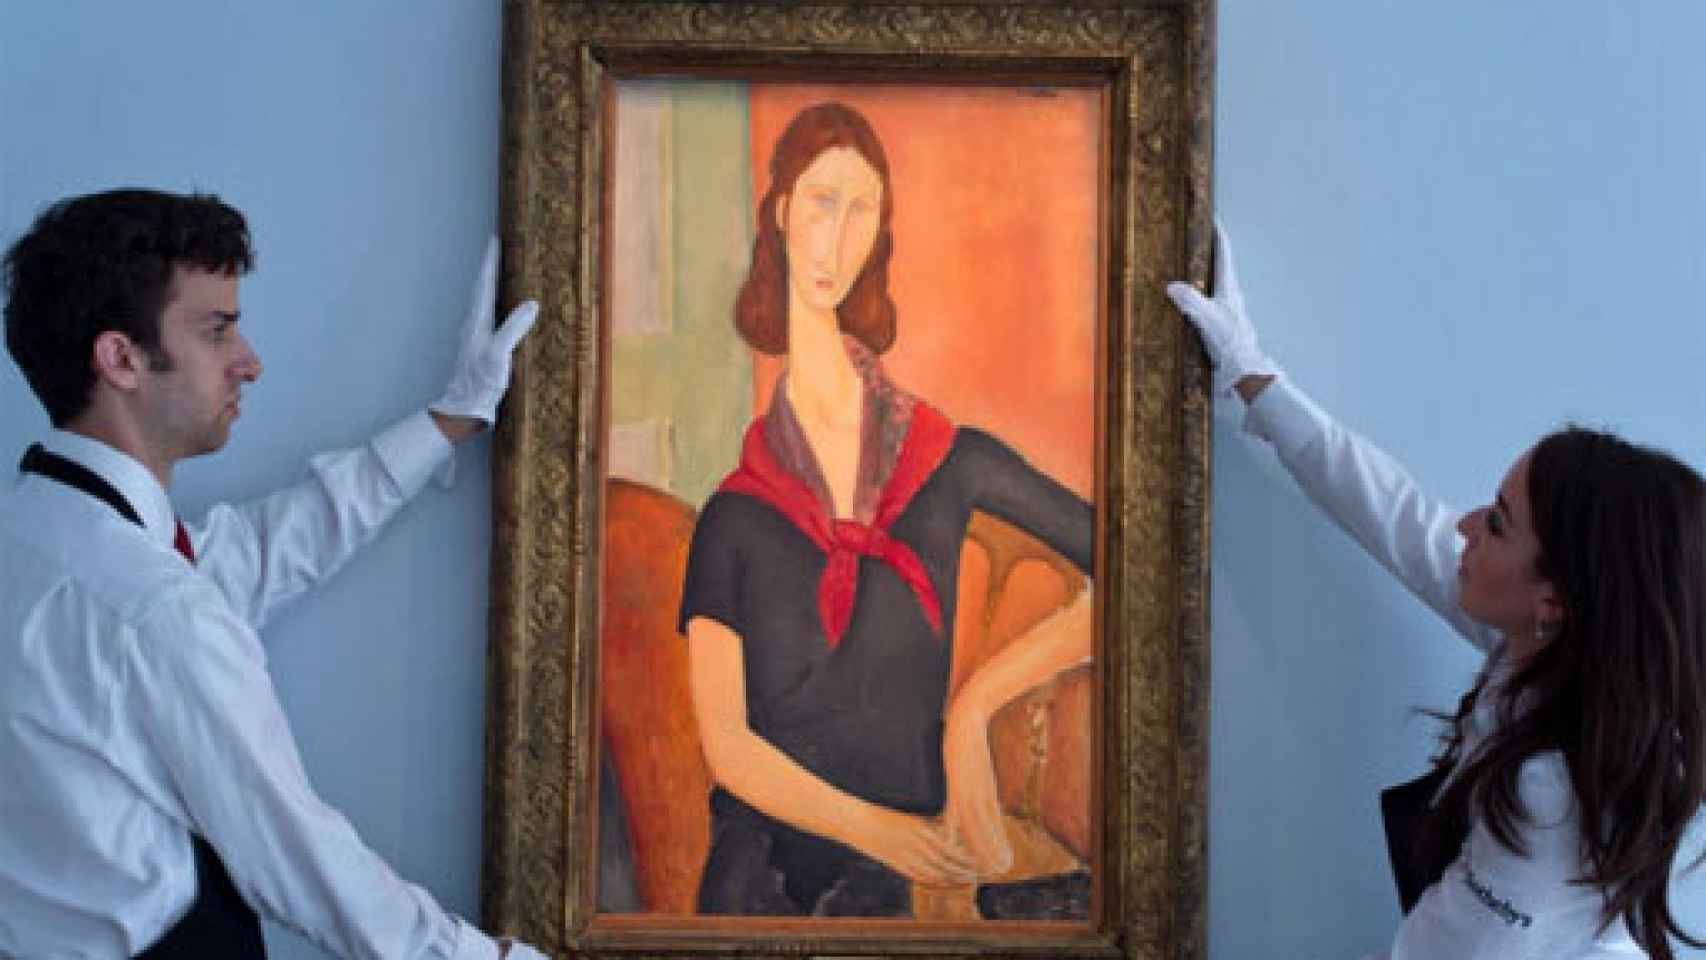 Image: A subasta la historia de amor de Modigliani